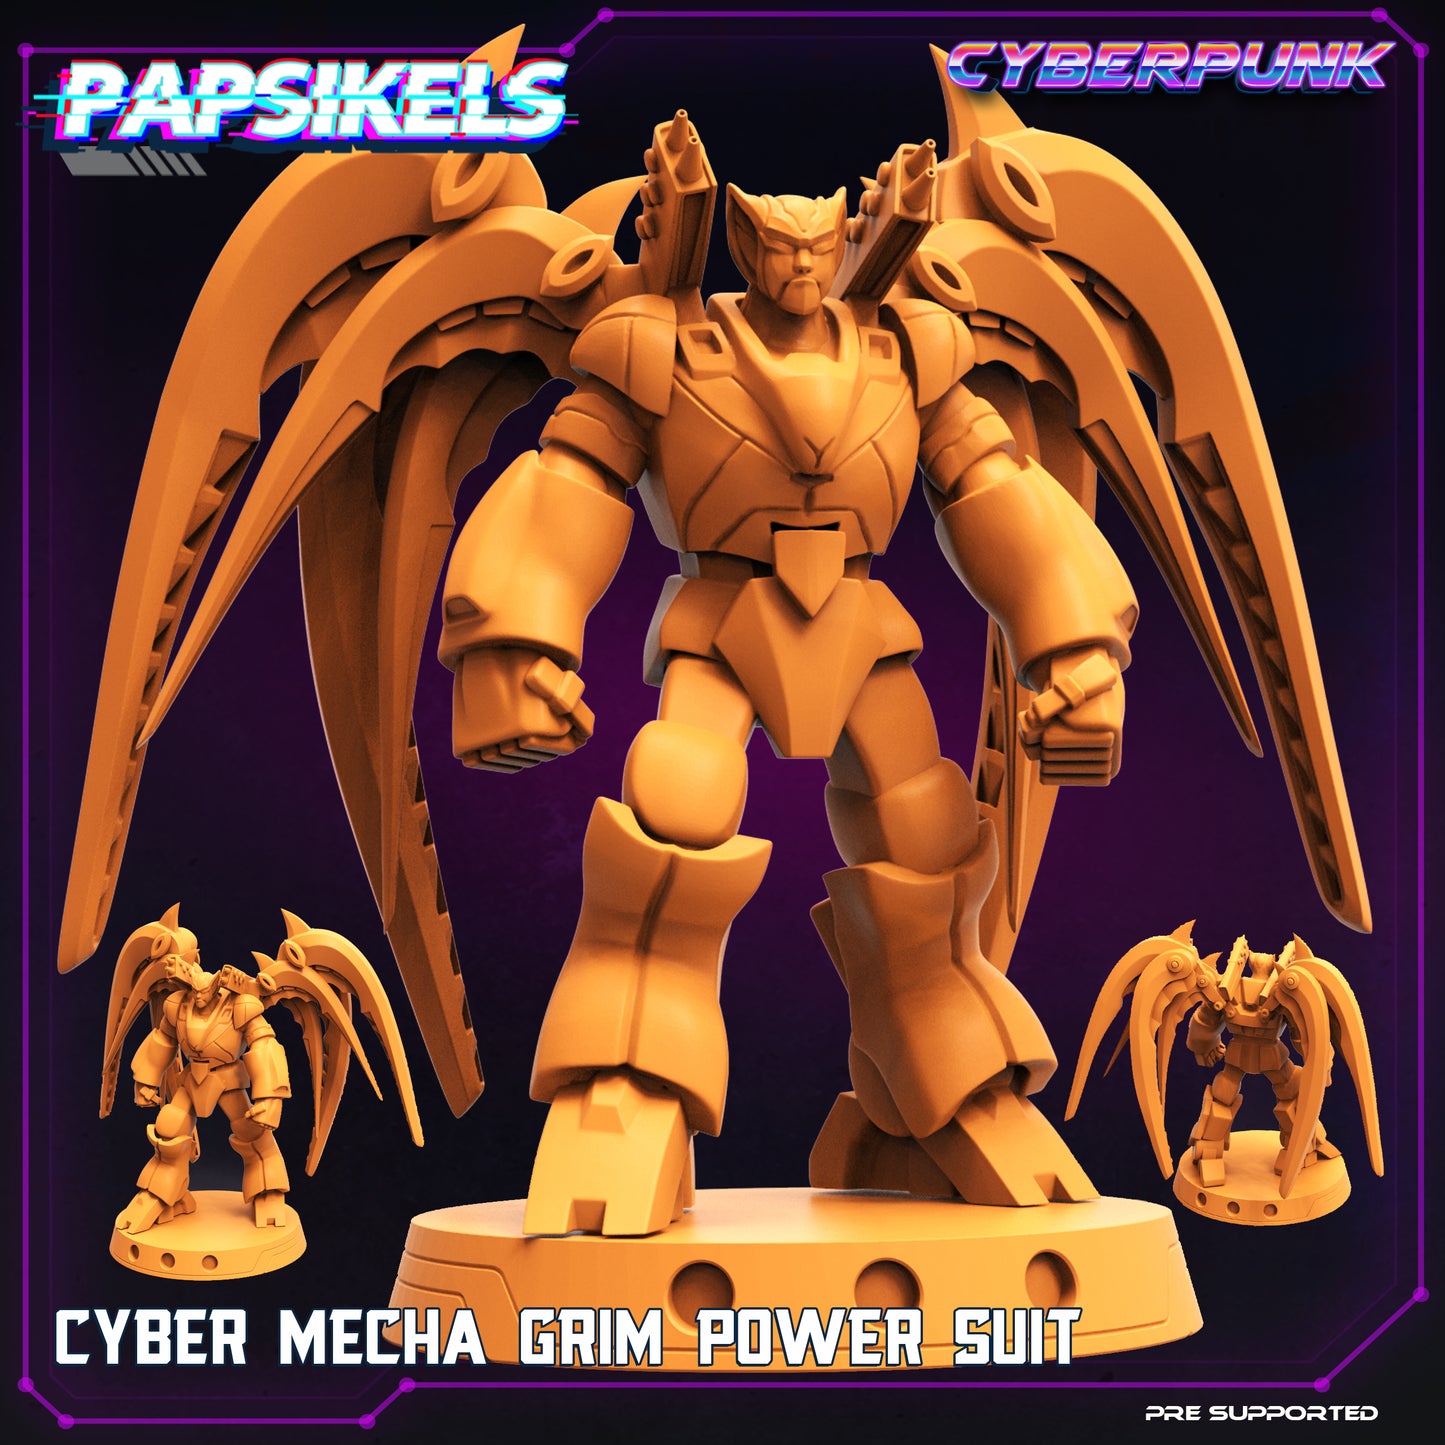 Grim Powersuit, Cyber Mecha